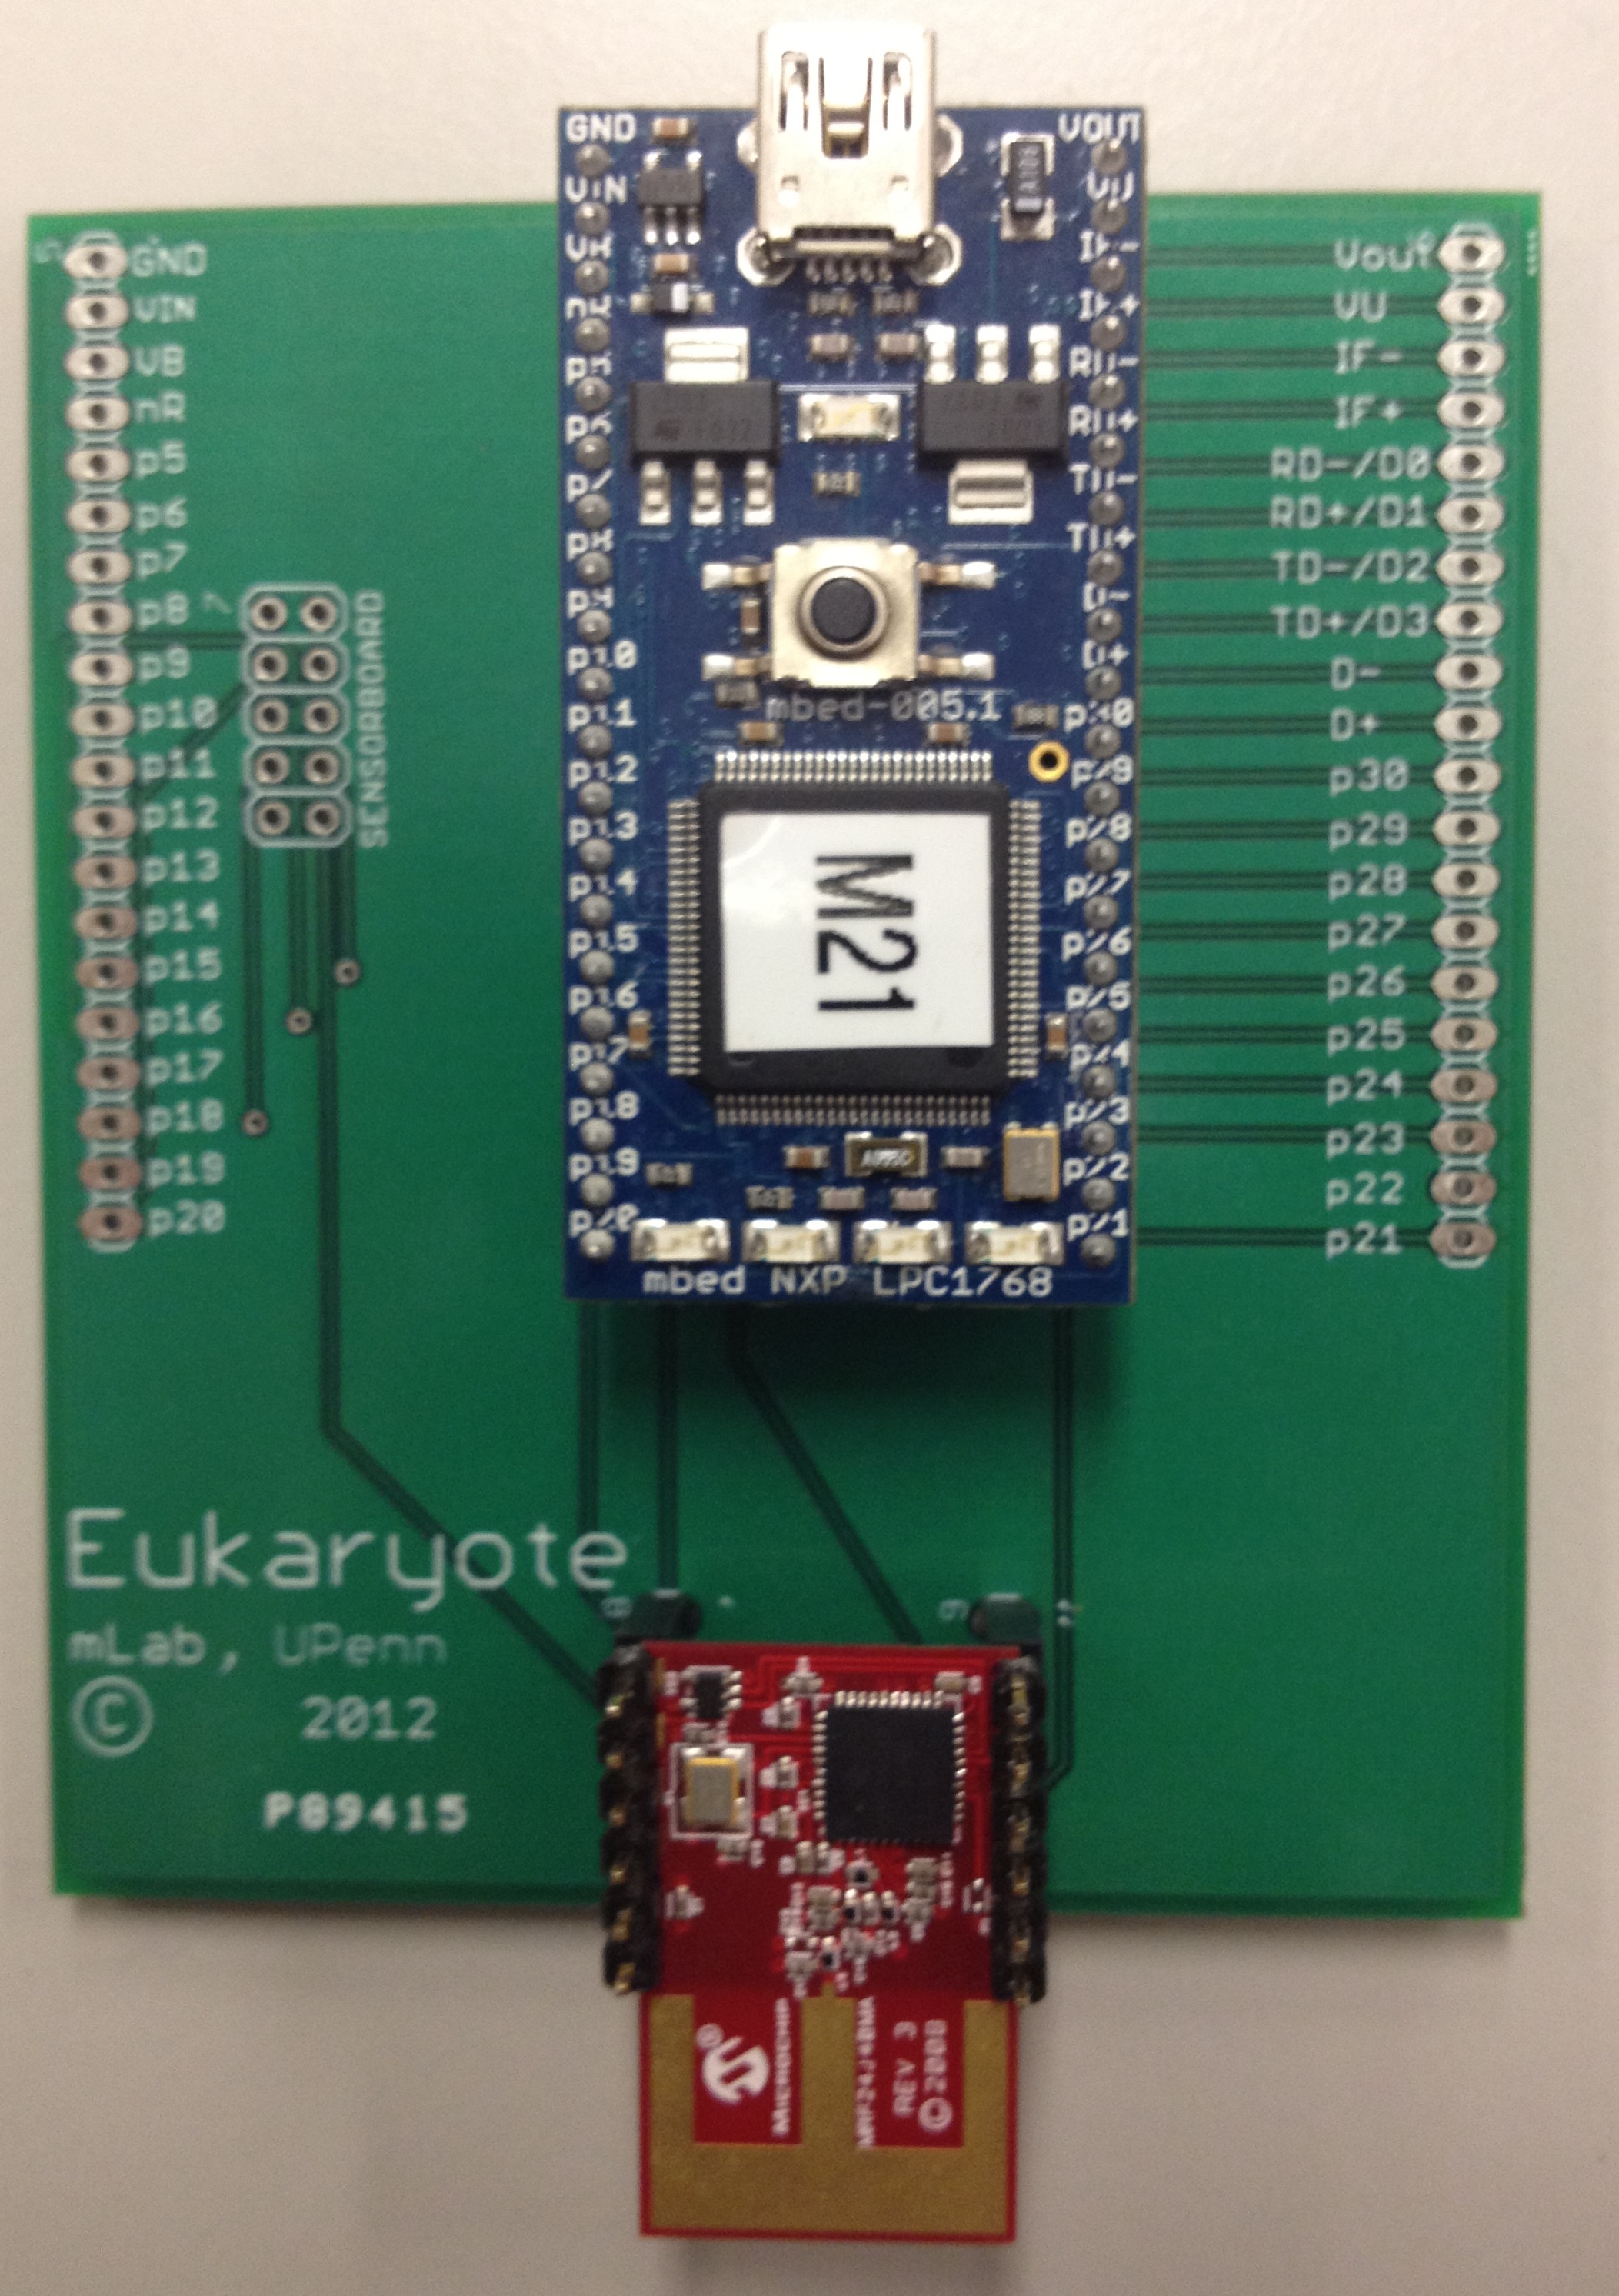 Eukaryote sensor board